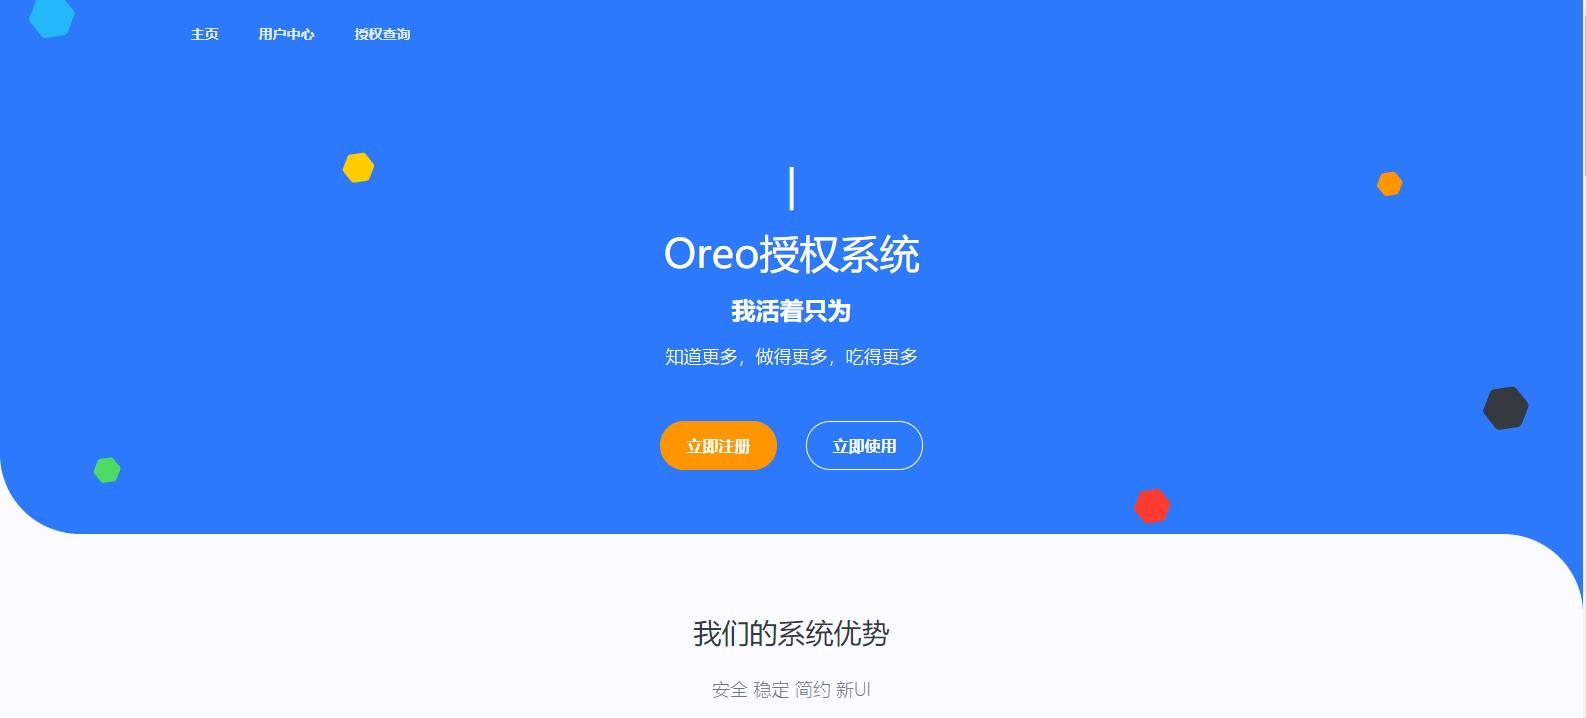 Oreo域名受权考证体系v1.0.6开源版本网站源码2160,oreo,域名,受权,考证,考证体系